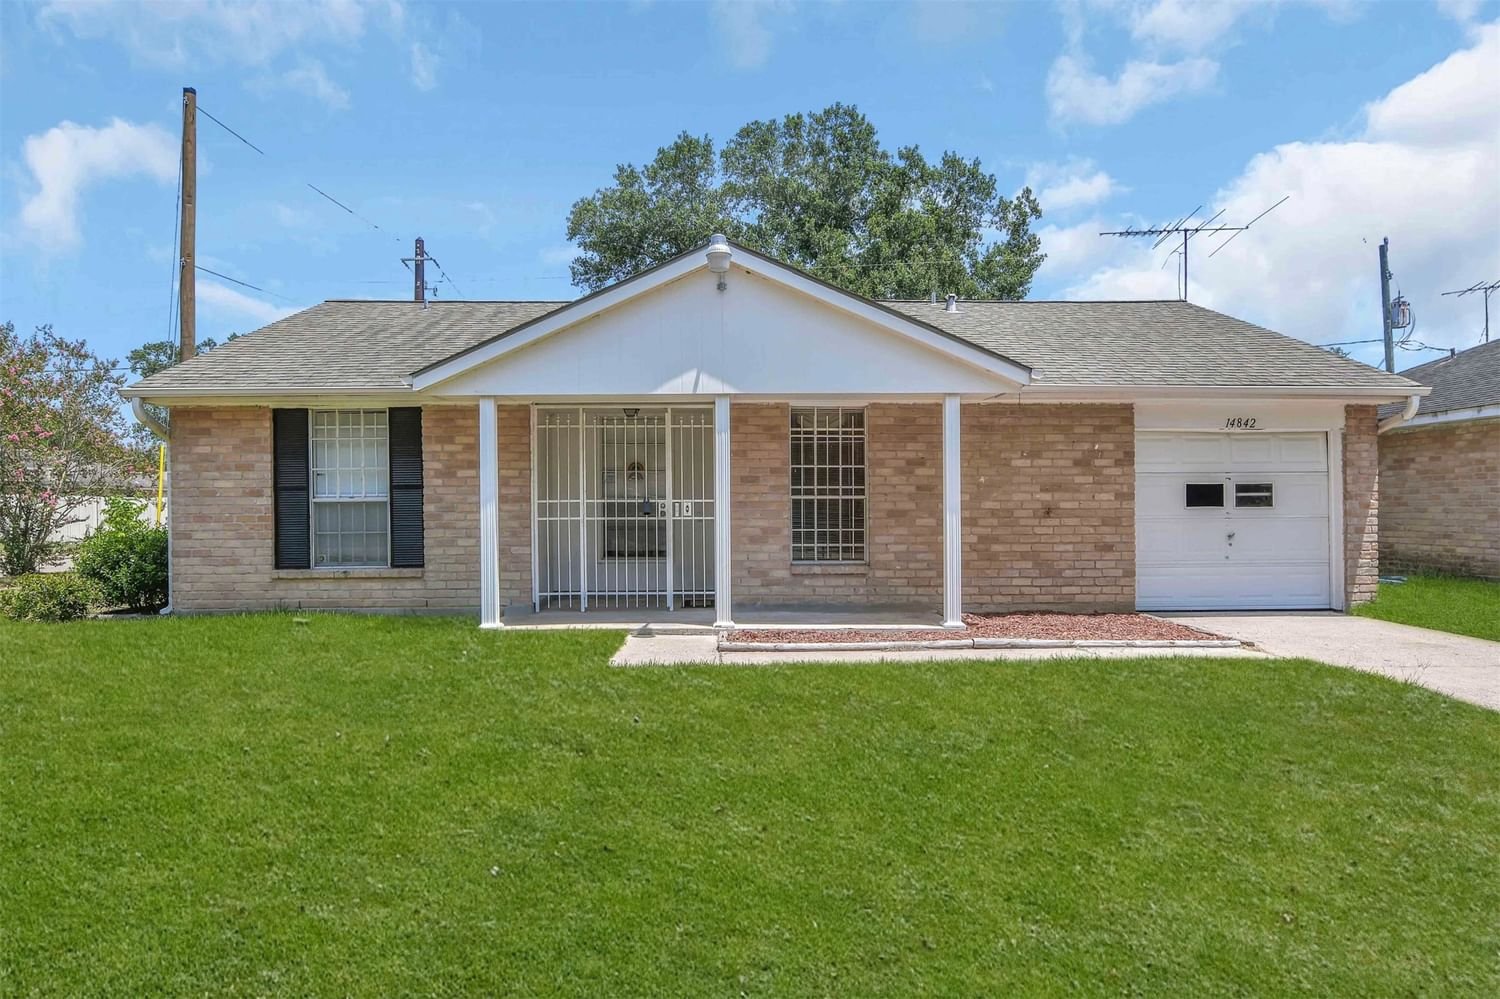 Real estate property located at 14842 Dogwood Tree, Harris, Houston, TX, US